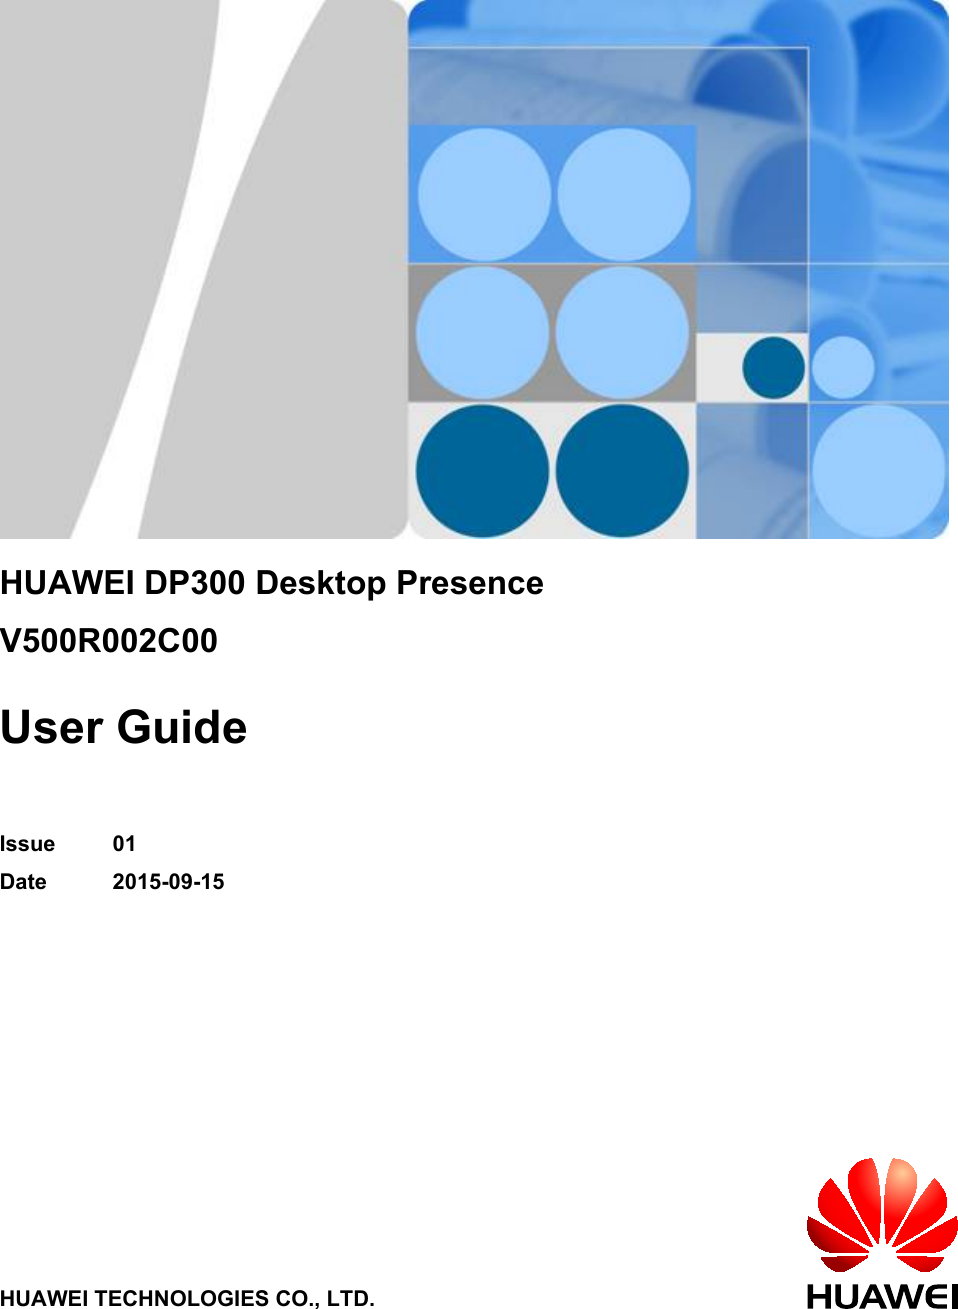 HUAWEI DP300 Desktop PresenceV500R002C00User GuideIssue 01Date 2015-09-15HUAWEI TECHNOLOGIES CO., LTD.